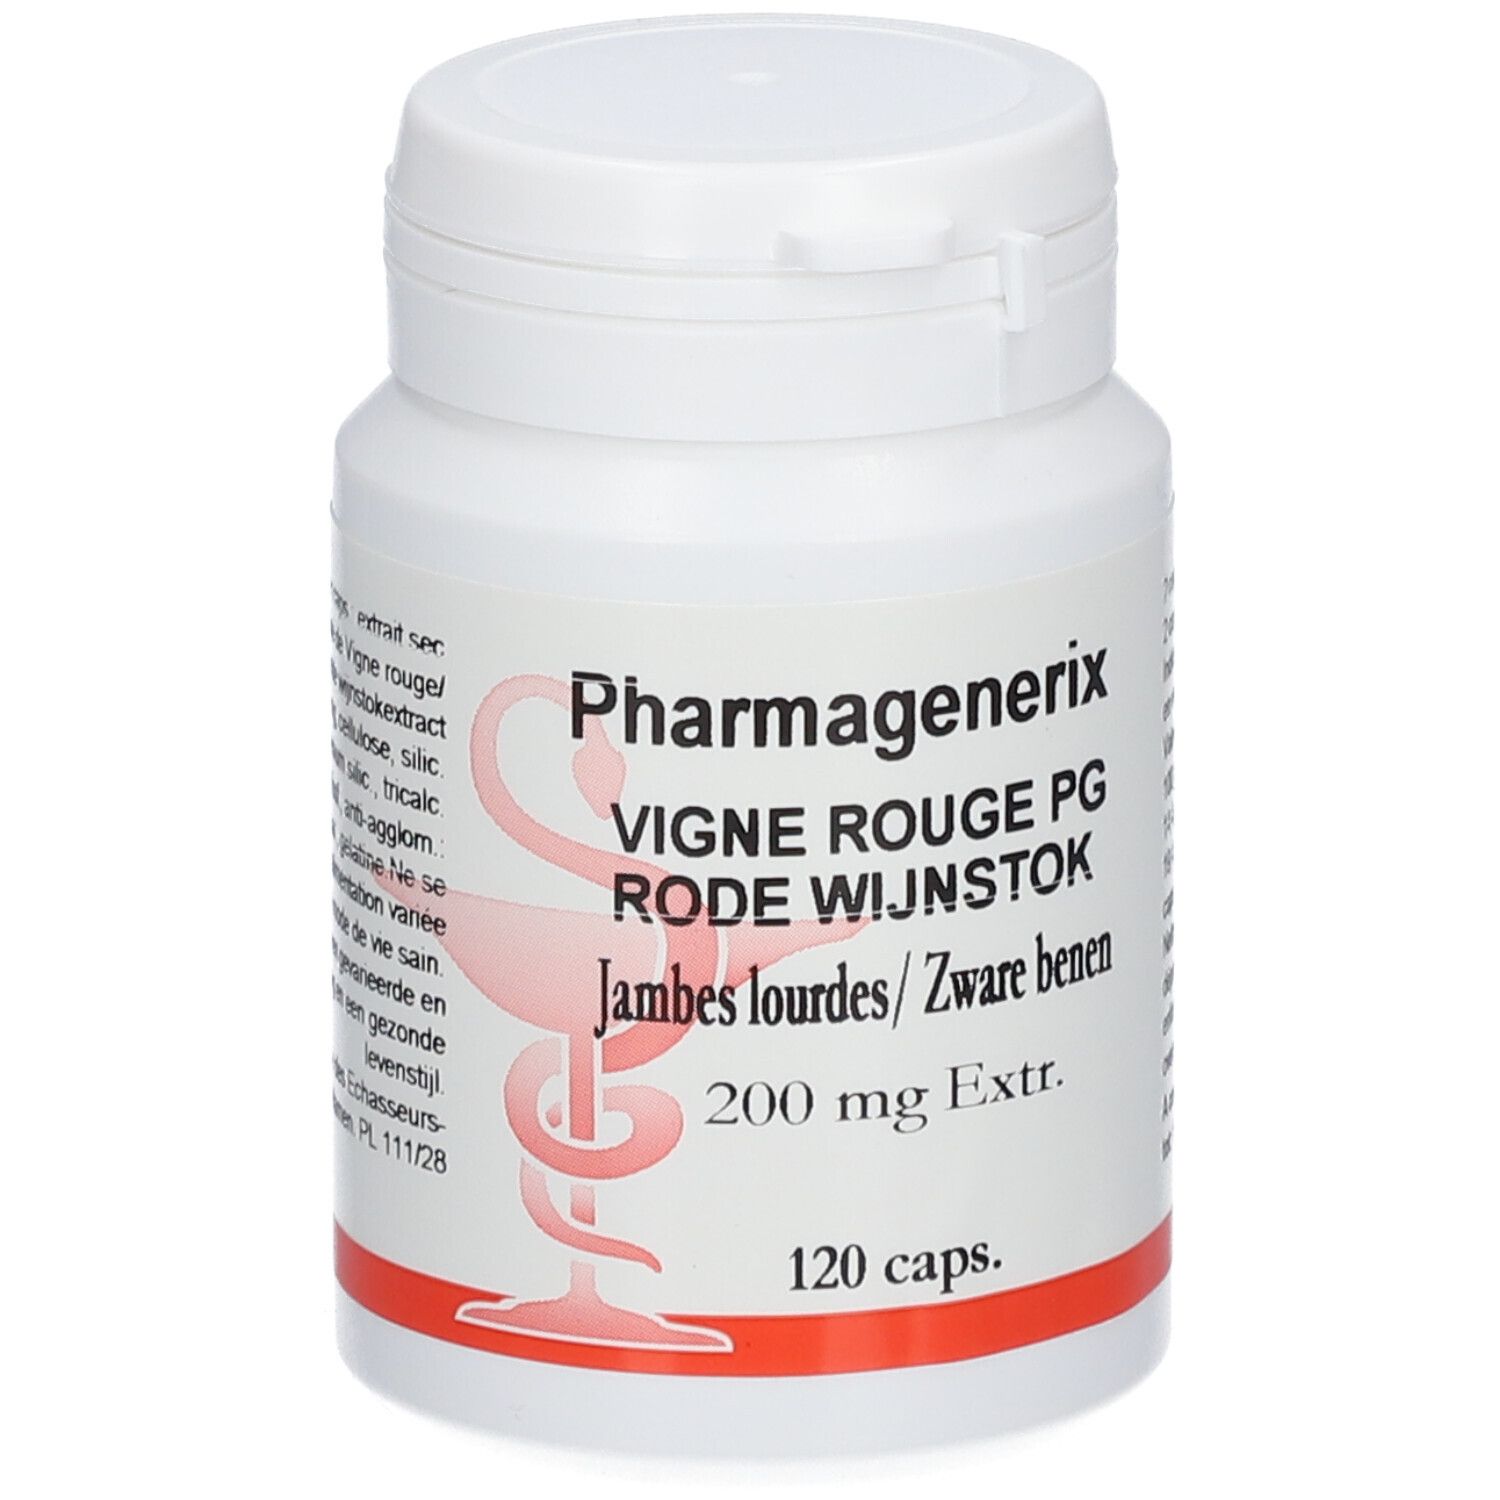 PharmaGenerix® Vigne rouge PG